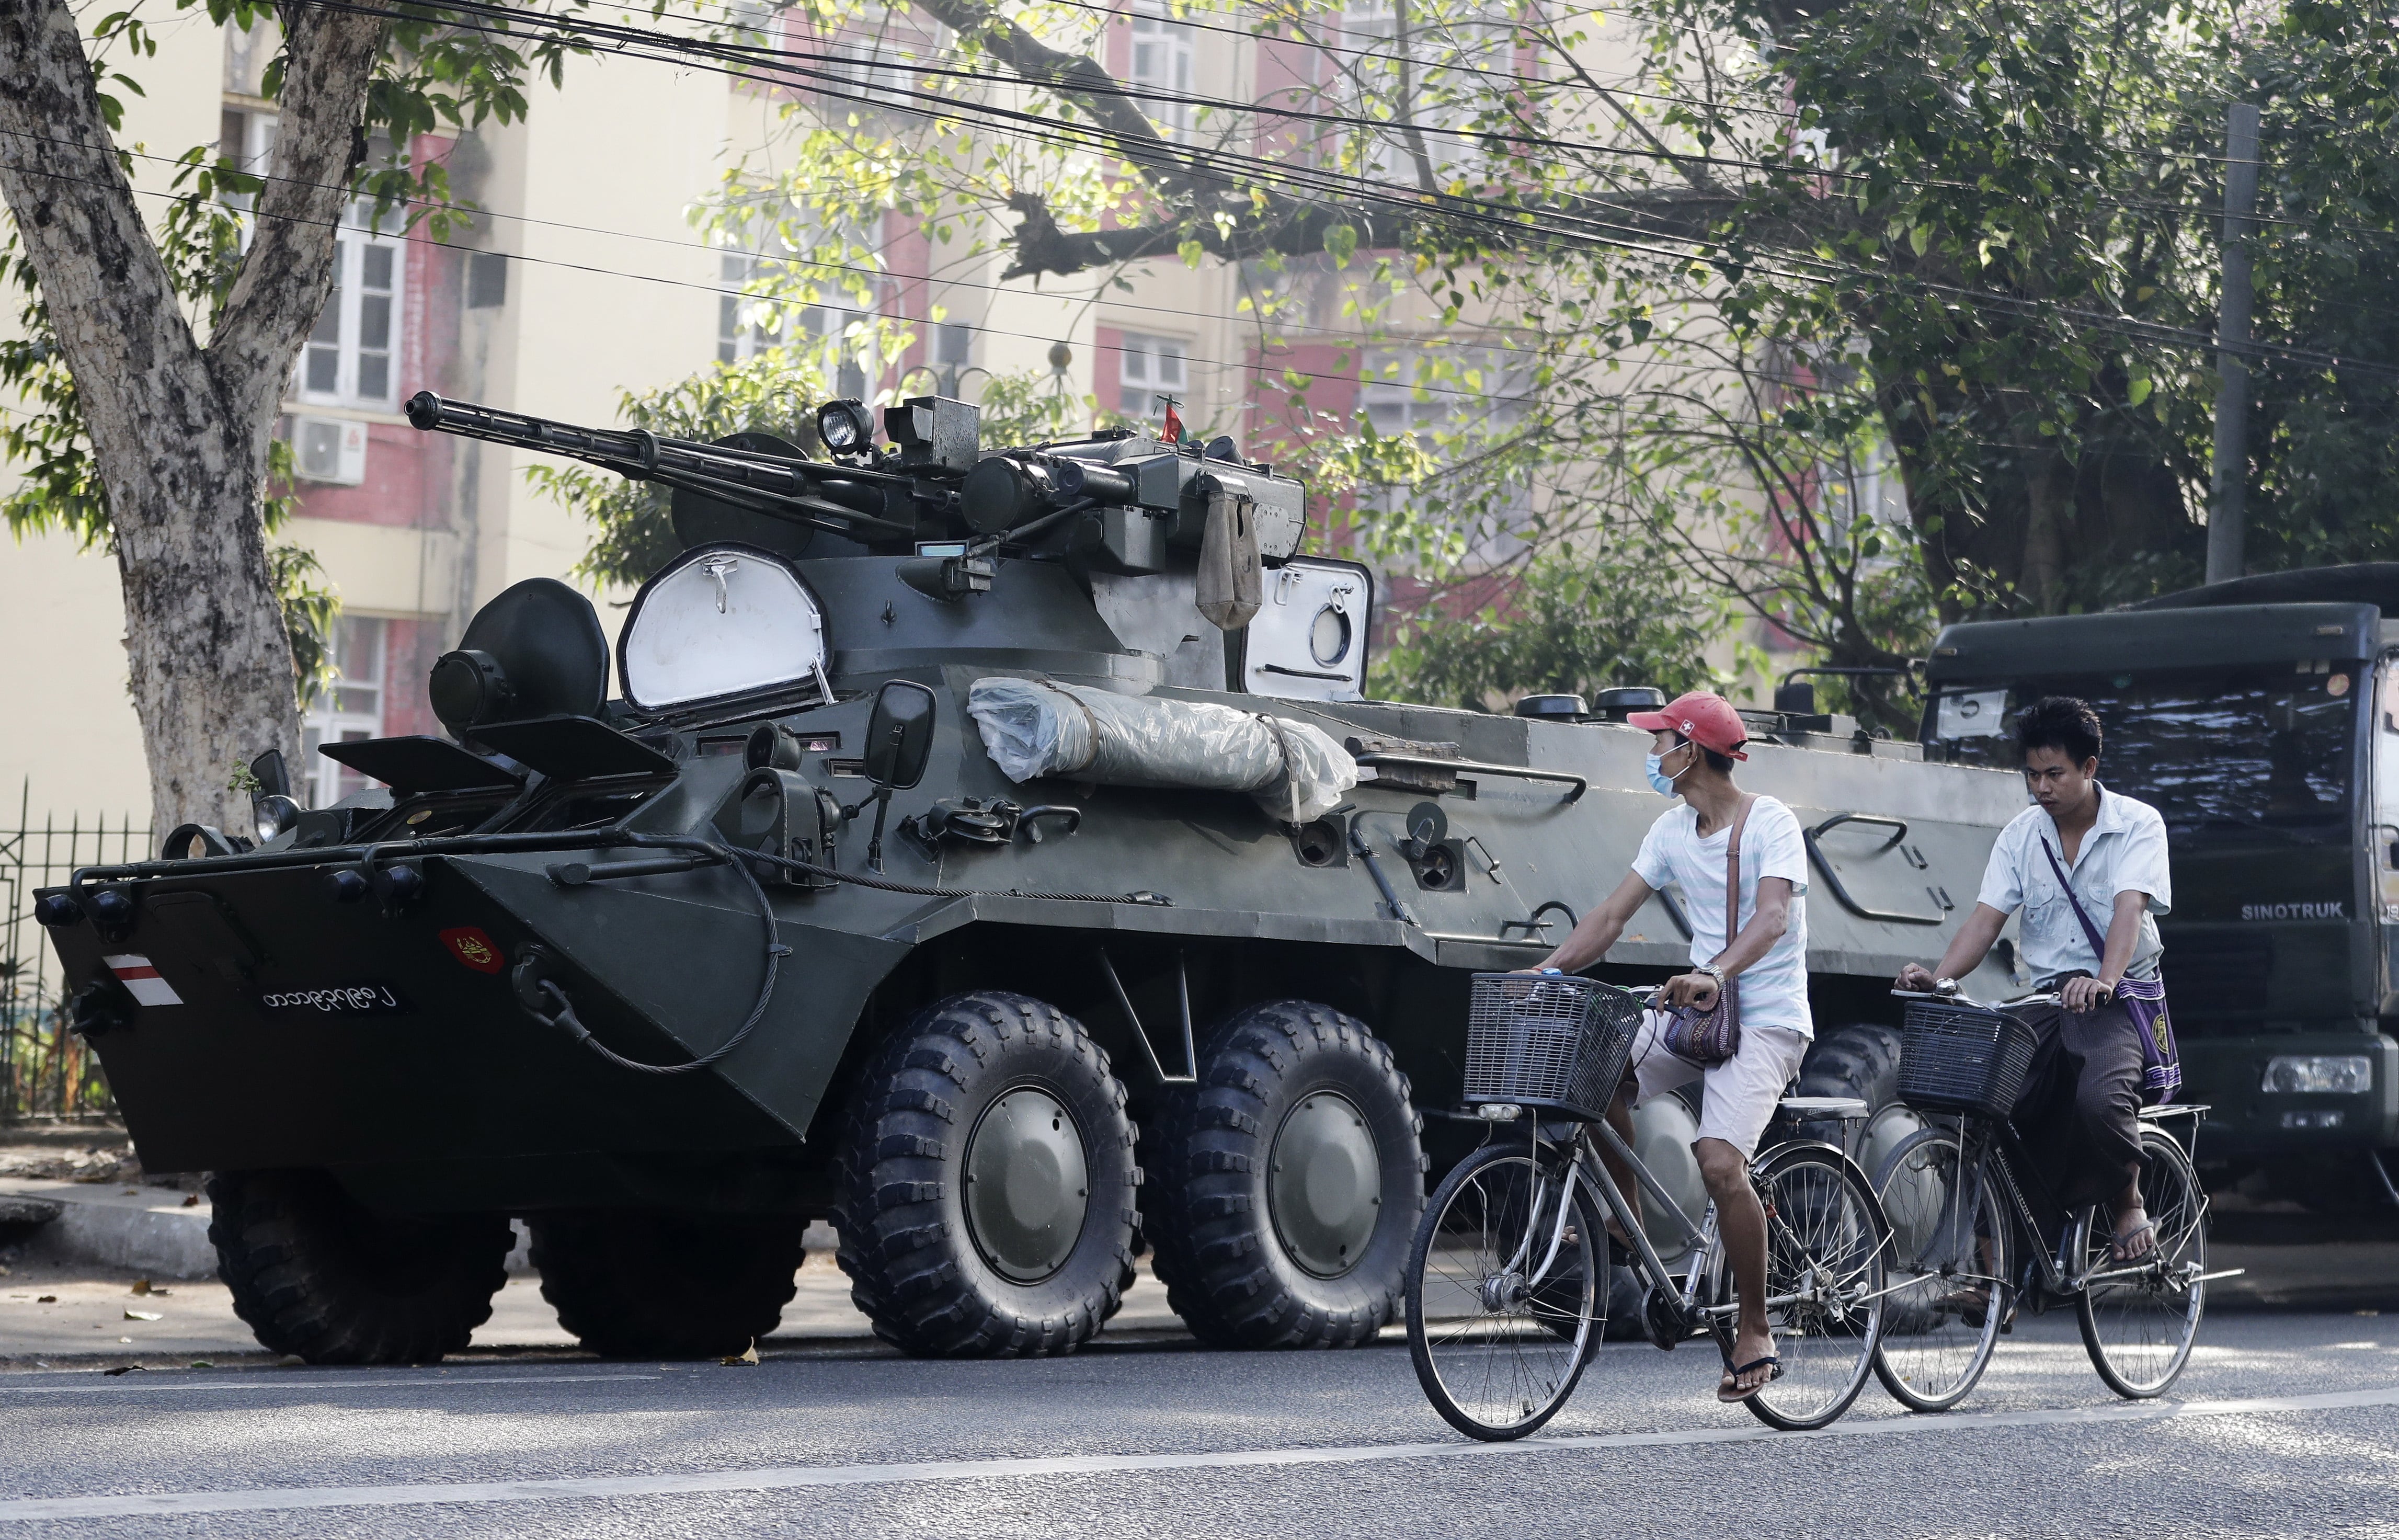 Foto de archivo de un vehículo militar en Rangún. EFE/EPA/STRINGER ATTENTION: This Image is part of a PHOTO SET 